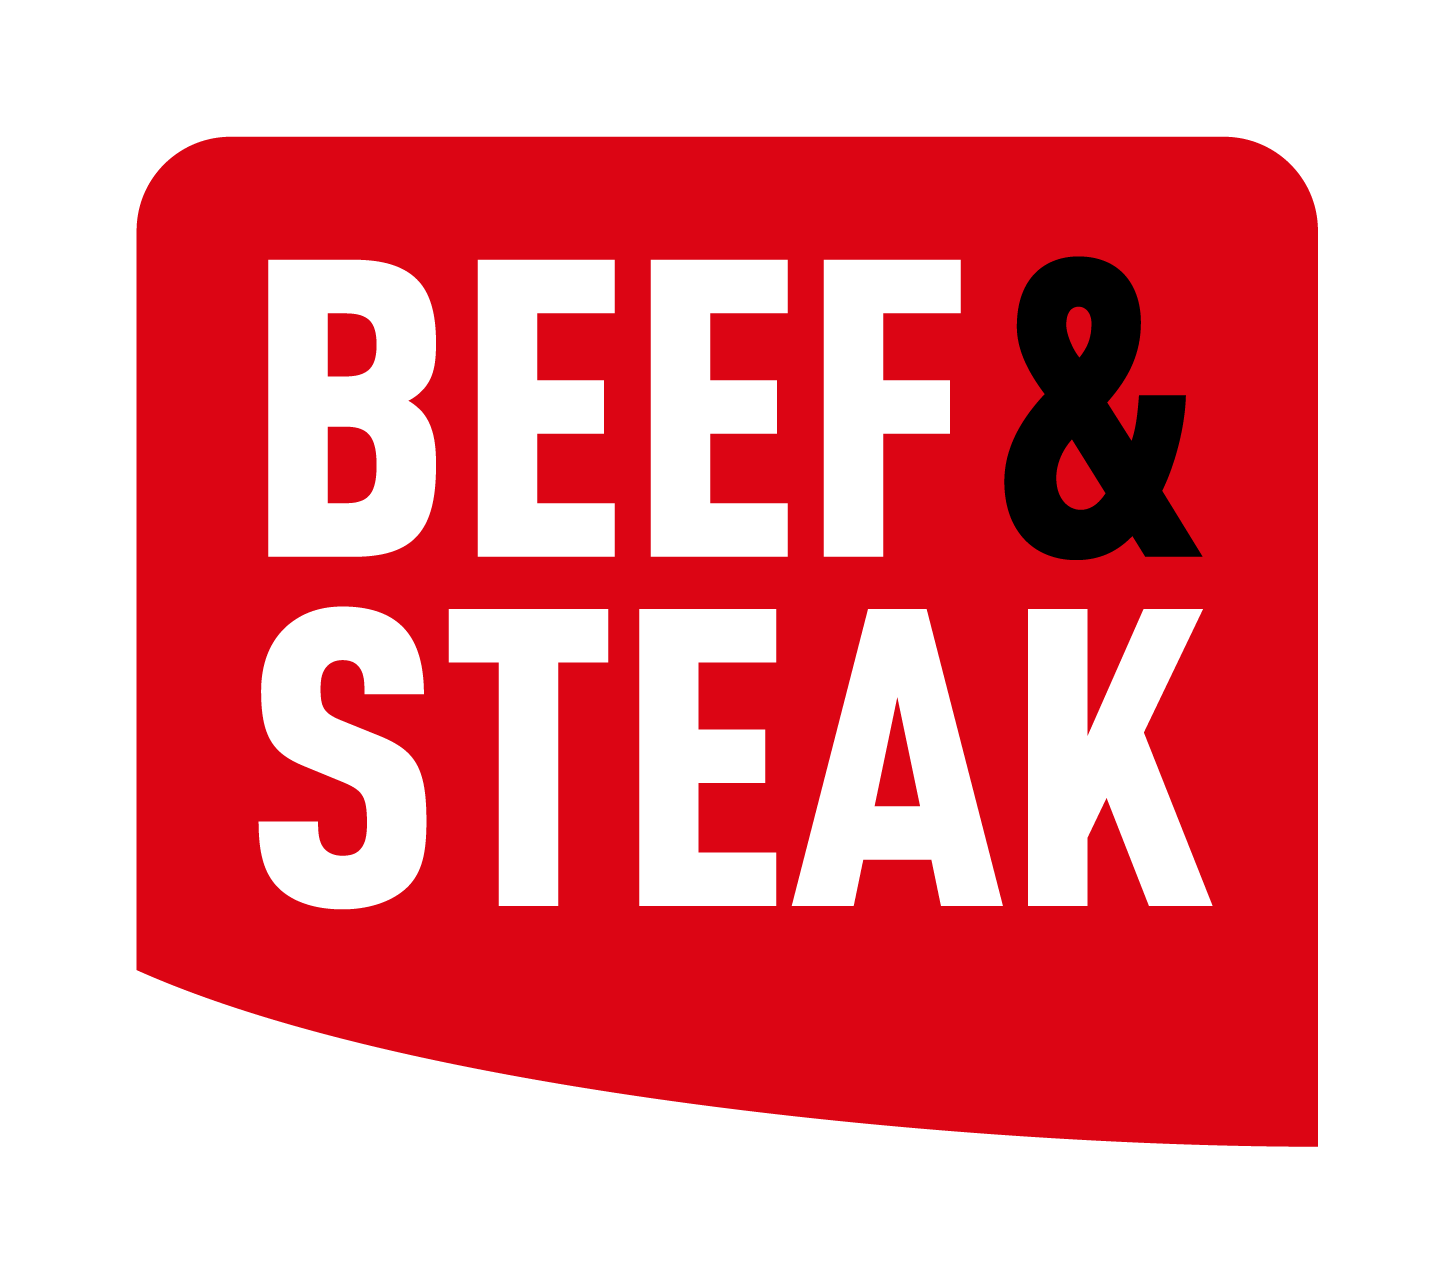 Beef & Steak review